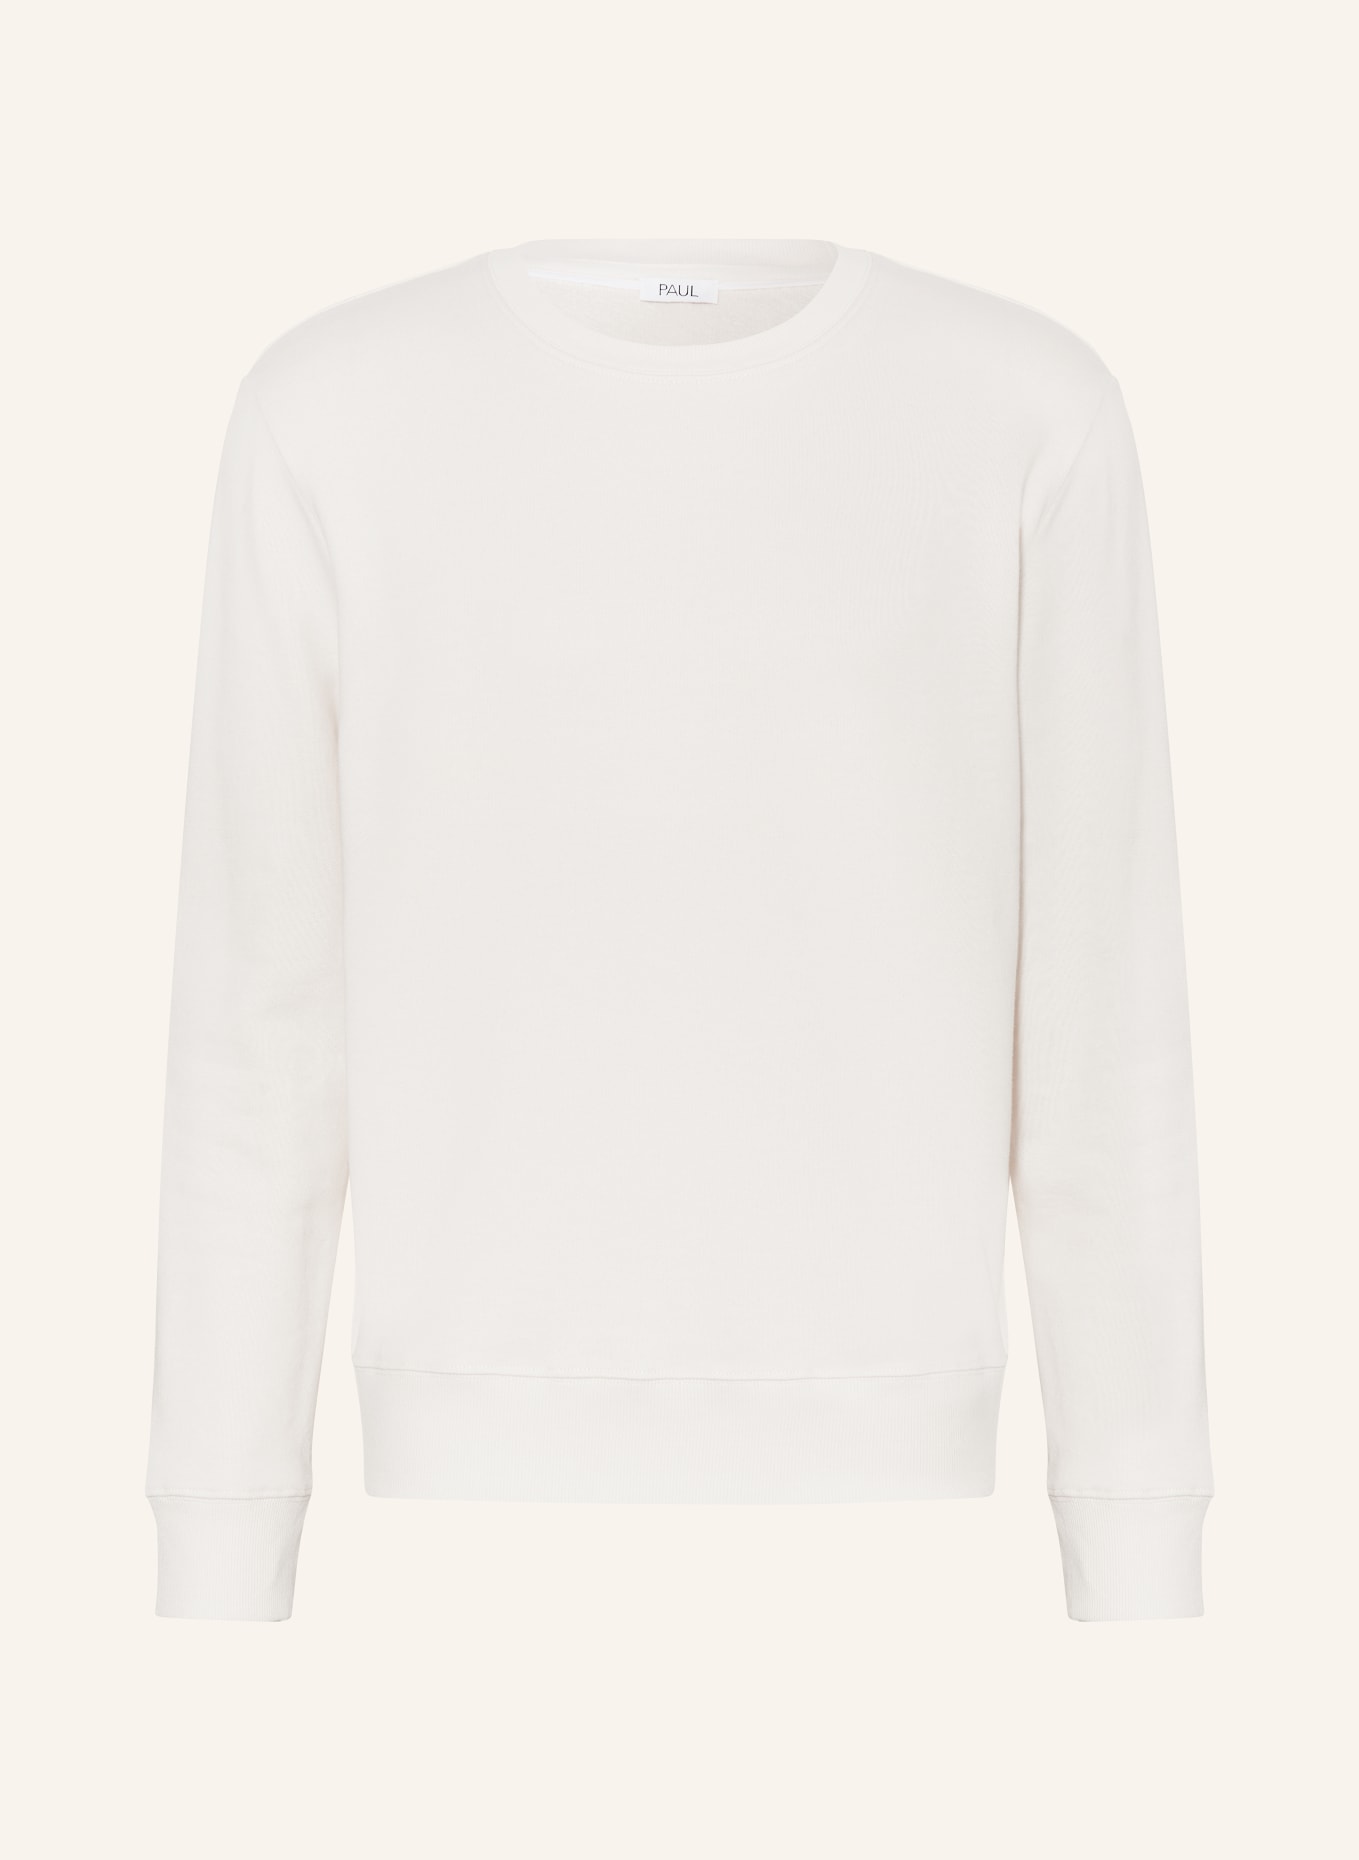 PAUL Sweatshirt, Color: BEIGE (Image 1)